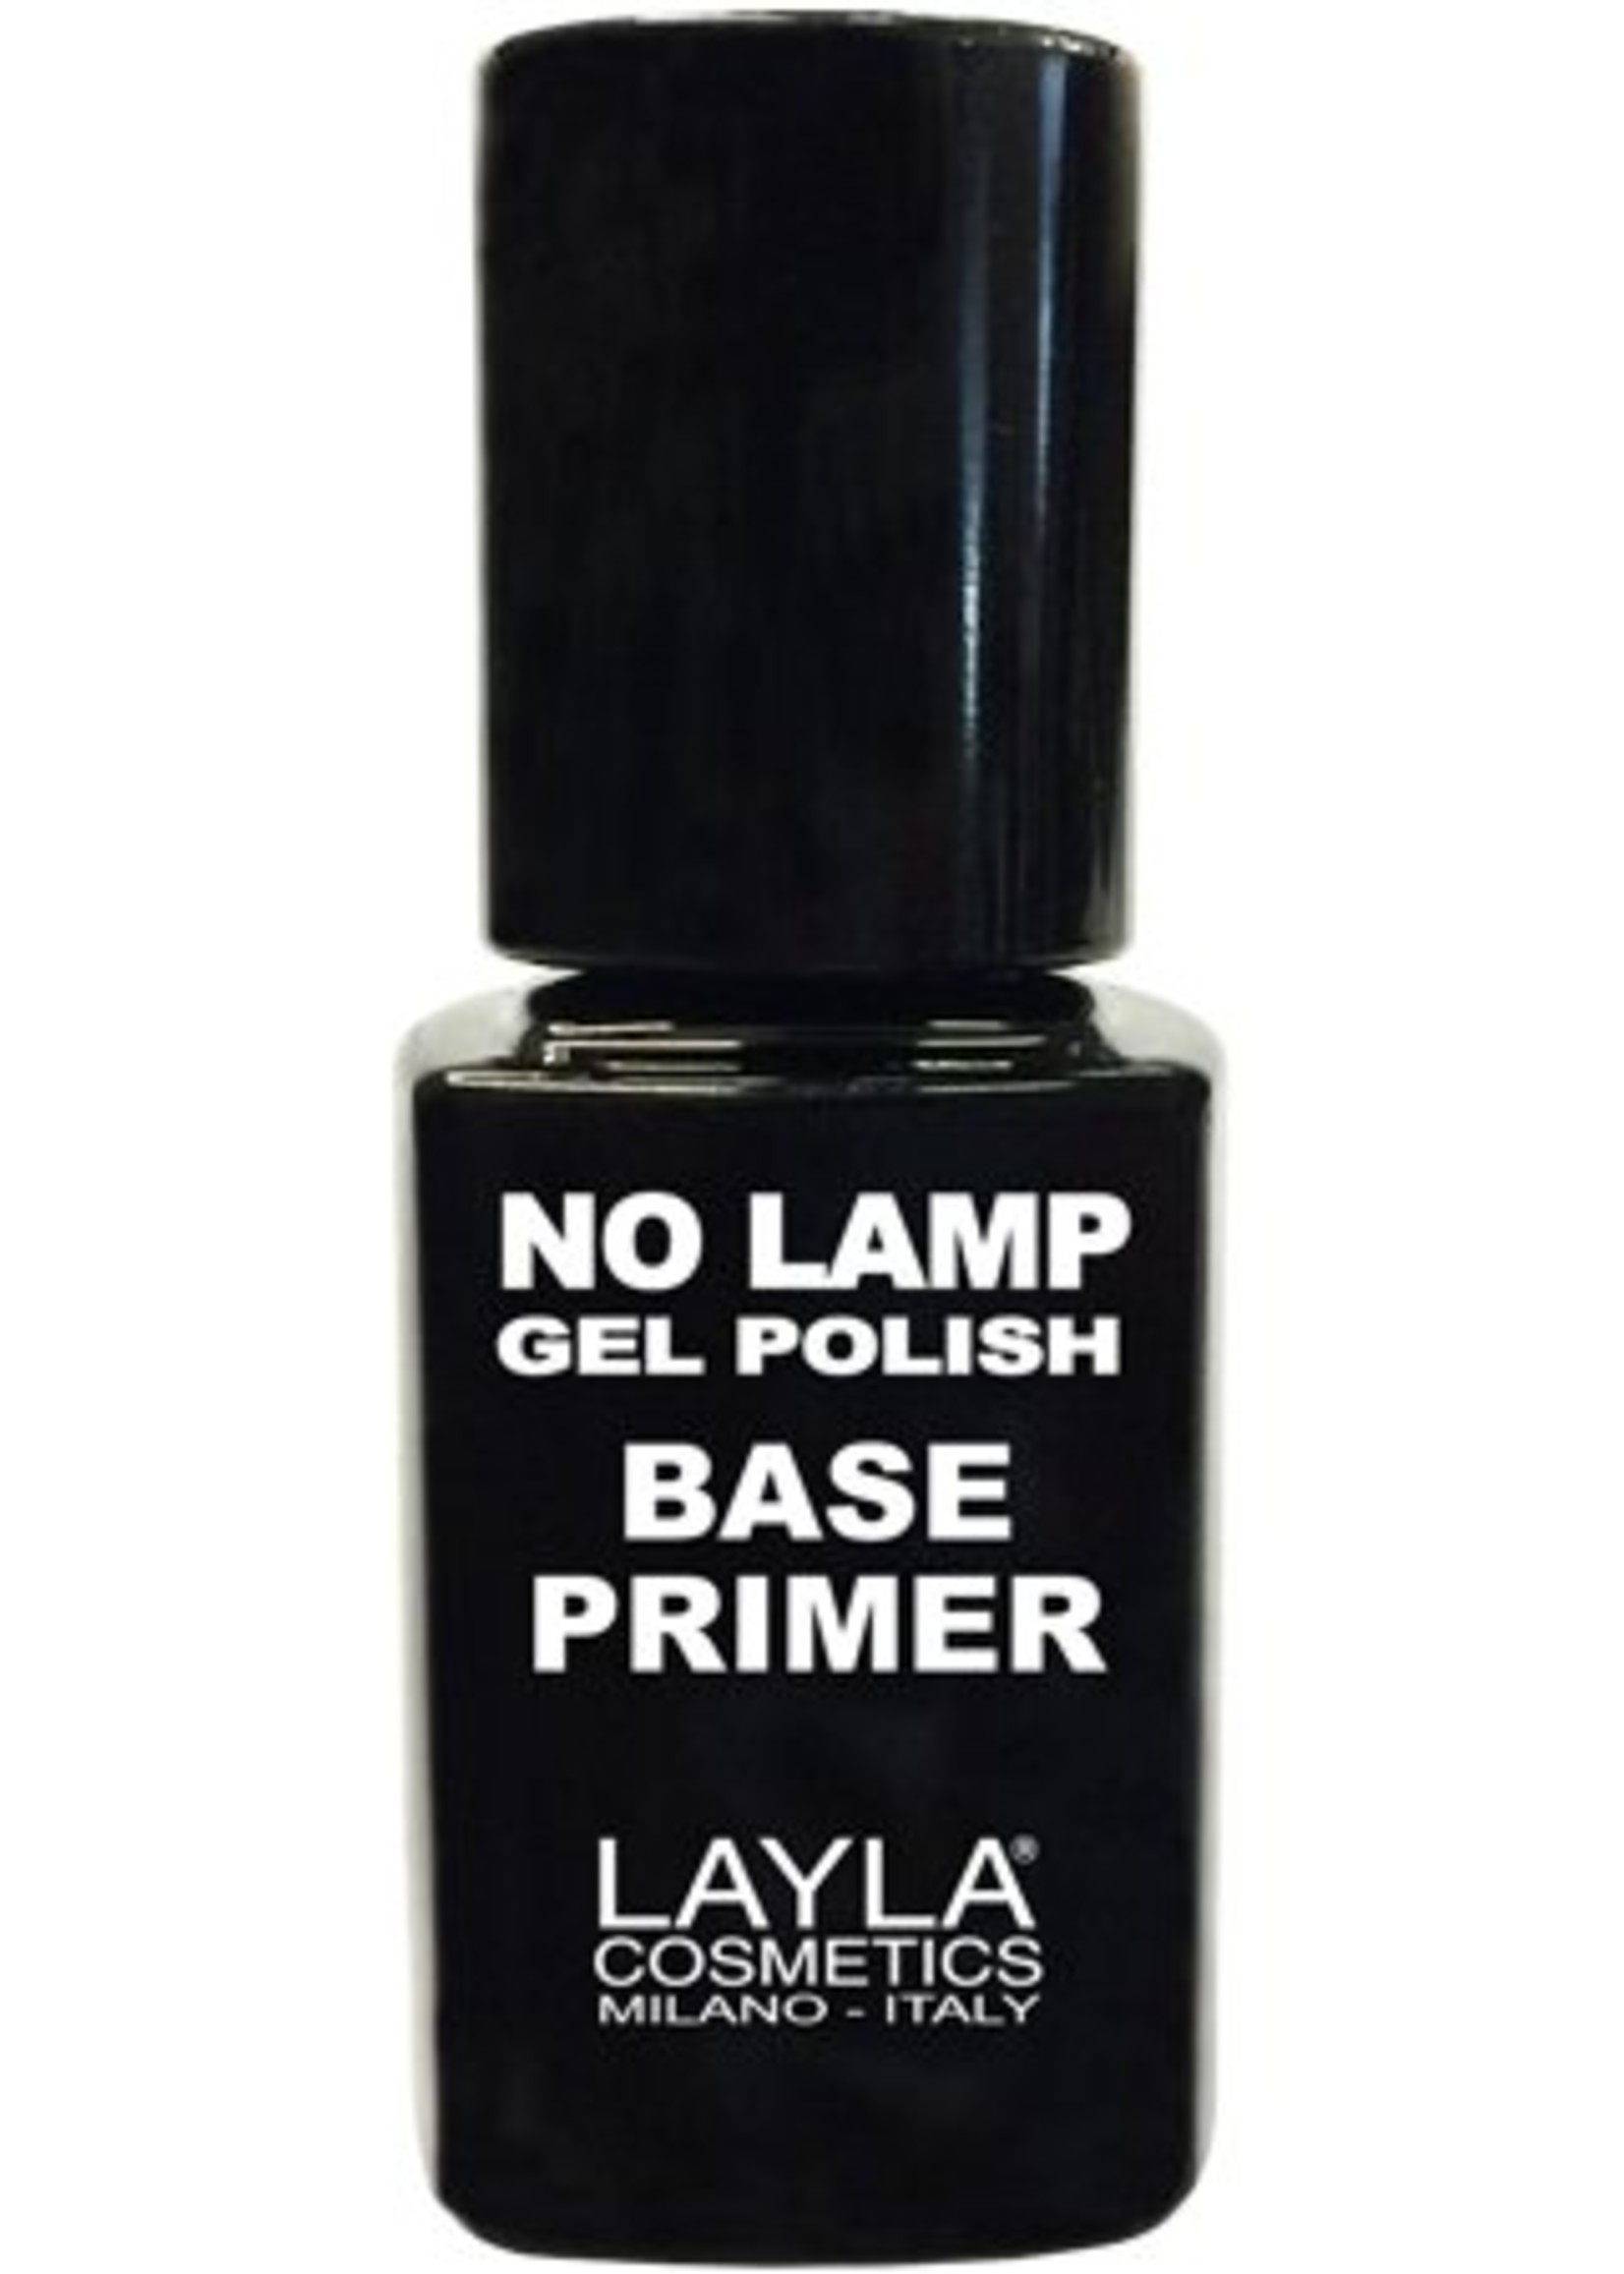 Base Primer - No Lamp Gel Polish - Layla Cosmetics